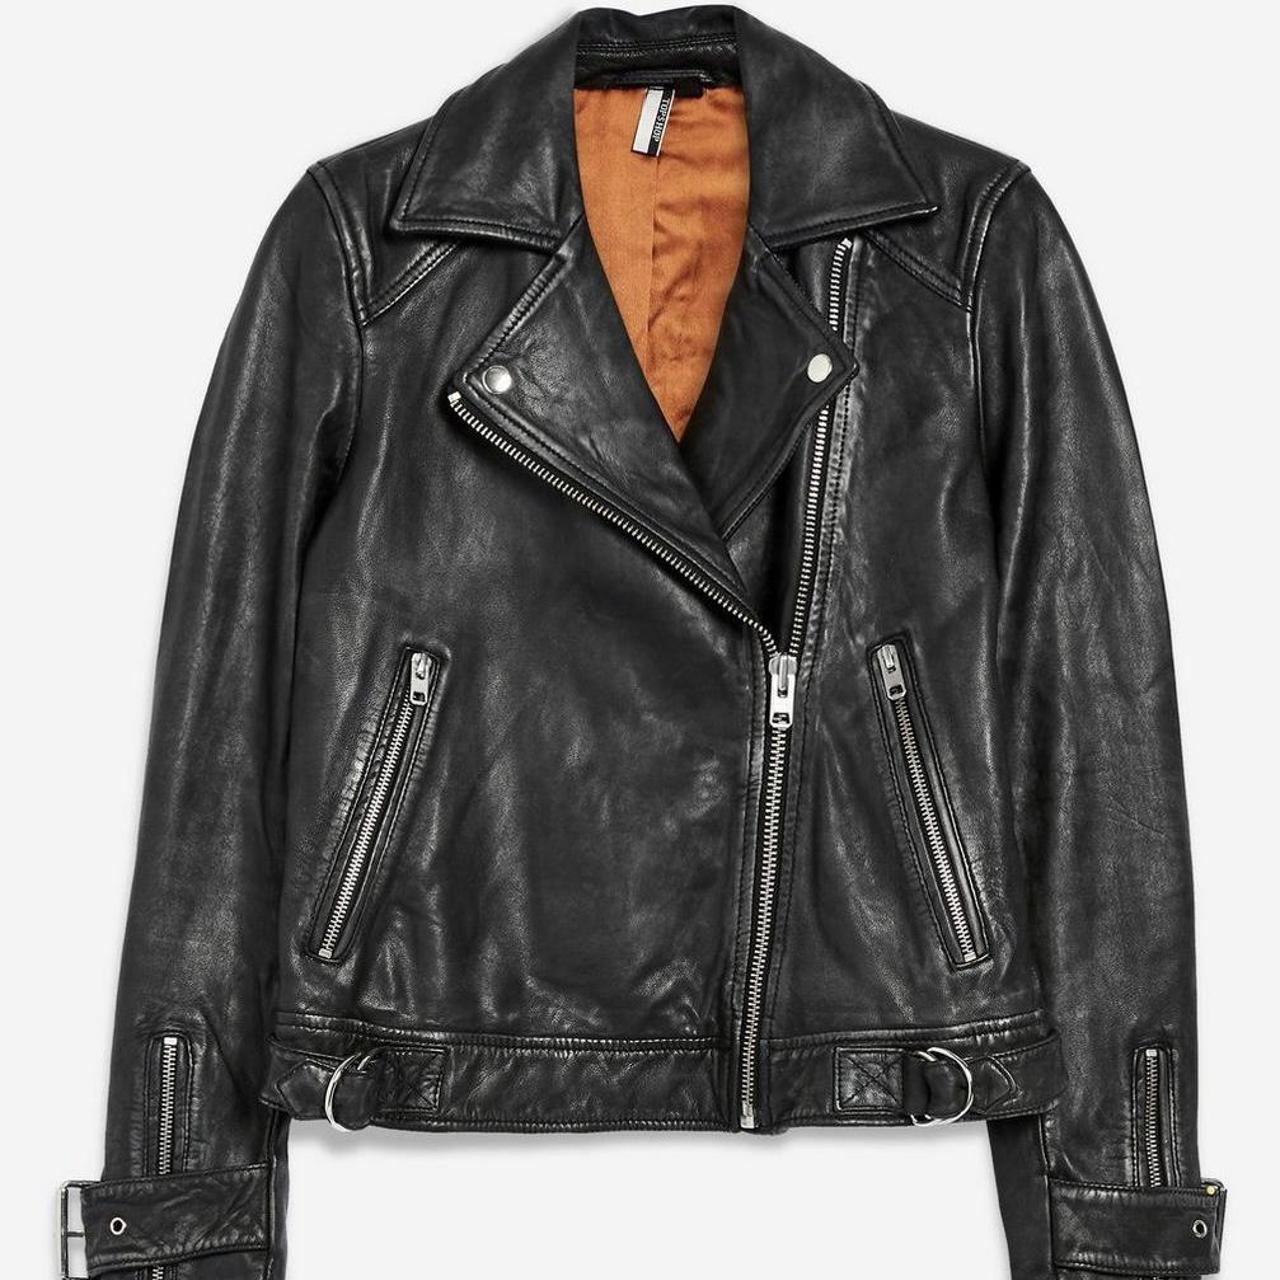 Topshop Real Leather Biker Jacket, Distressed Look,... - Depop